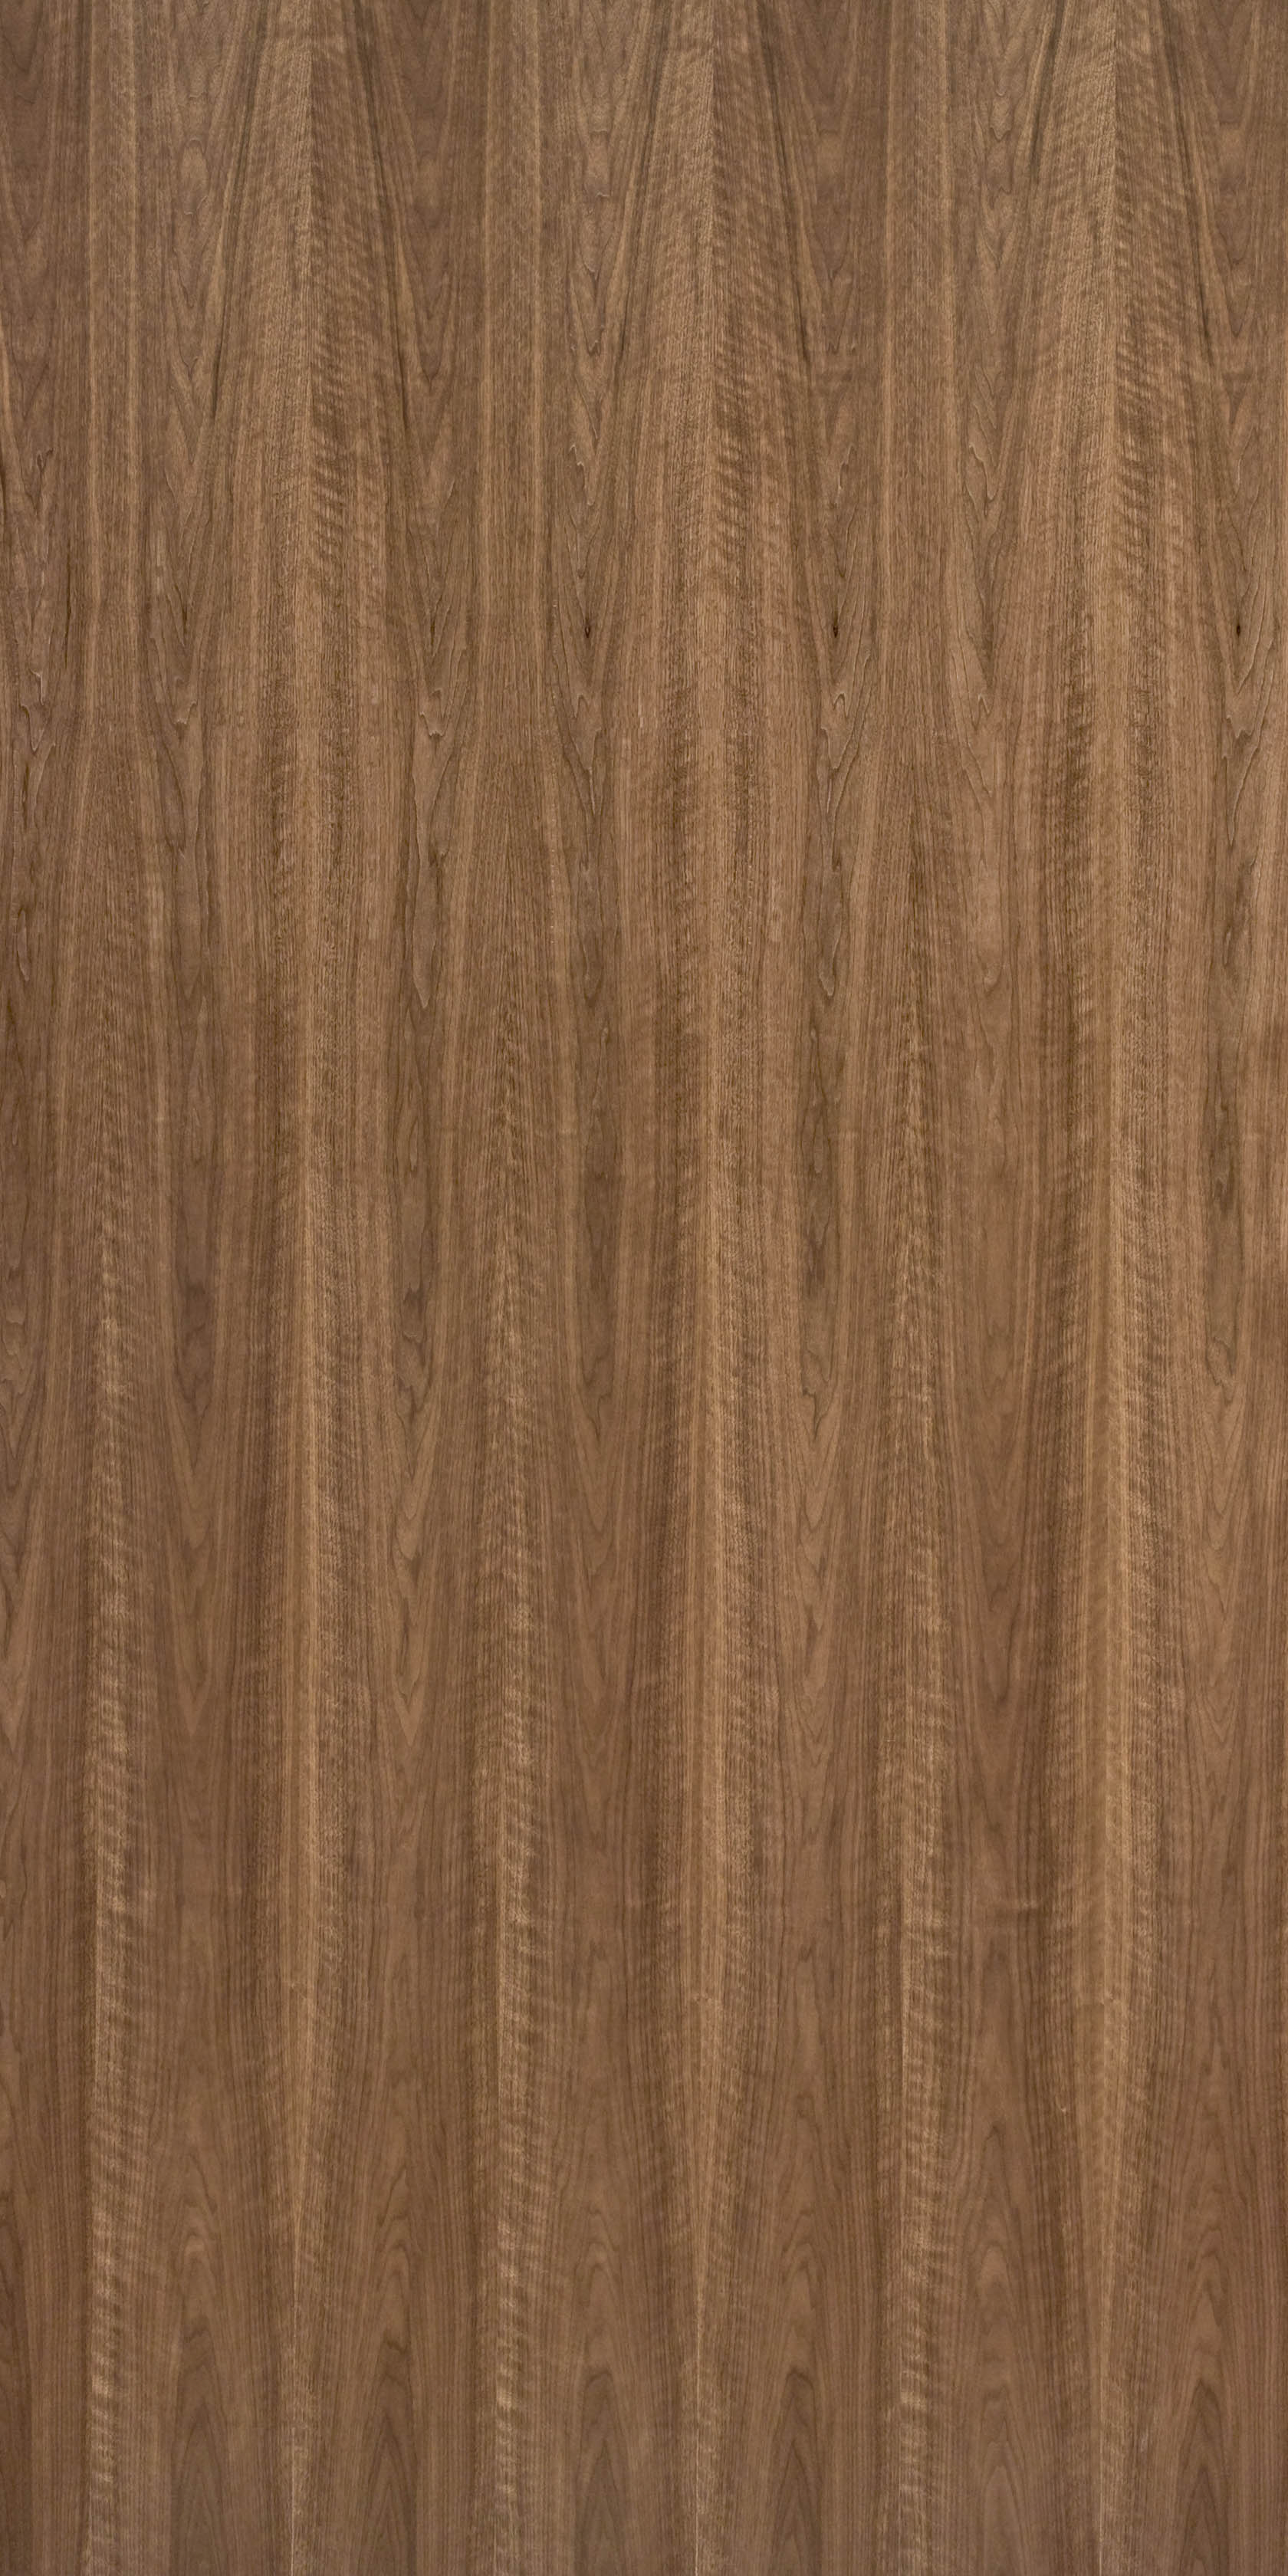 Etimoe Walnut wood composite veneer 5 x 8 with thin fleece back